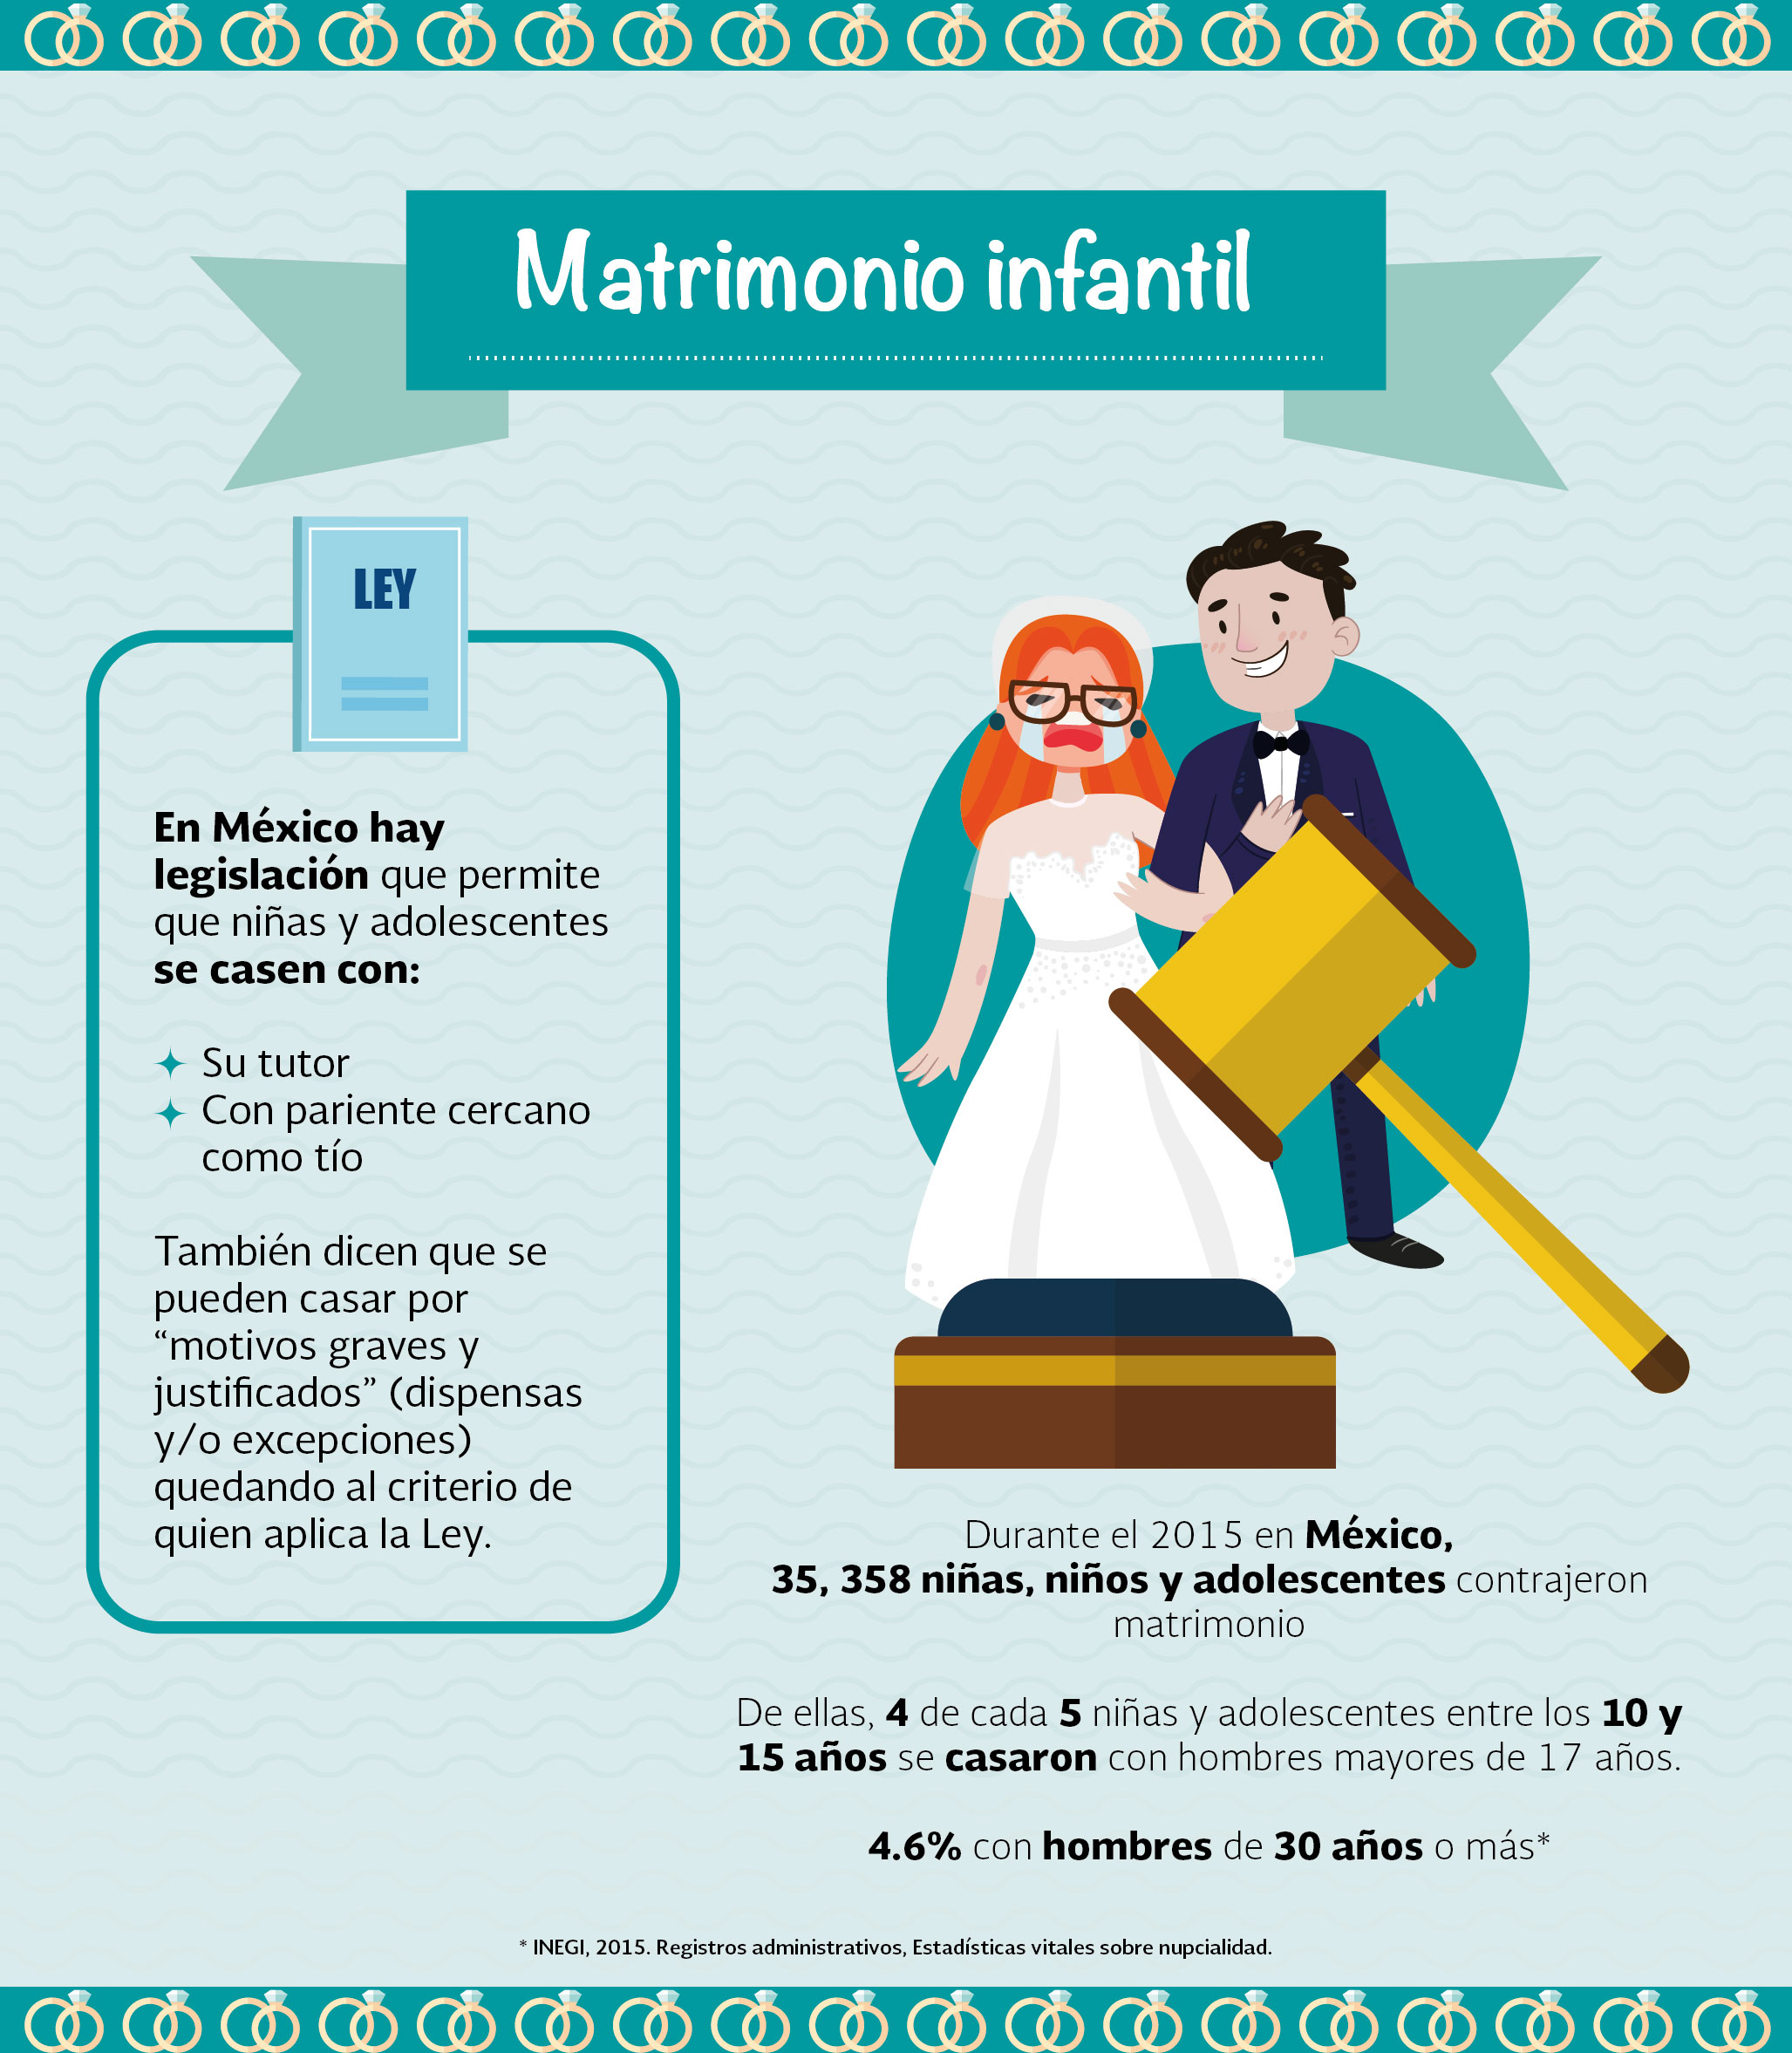 /cms/uploads/image/file/271337/infografi_a_matrimonio_infantil_resolucio_n-01.jpg